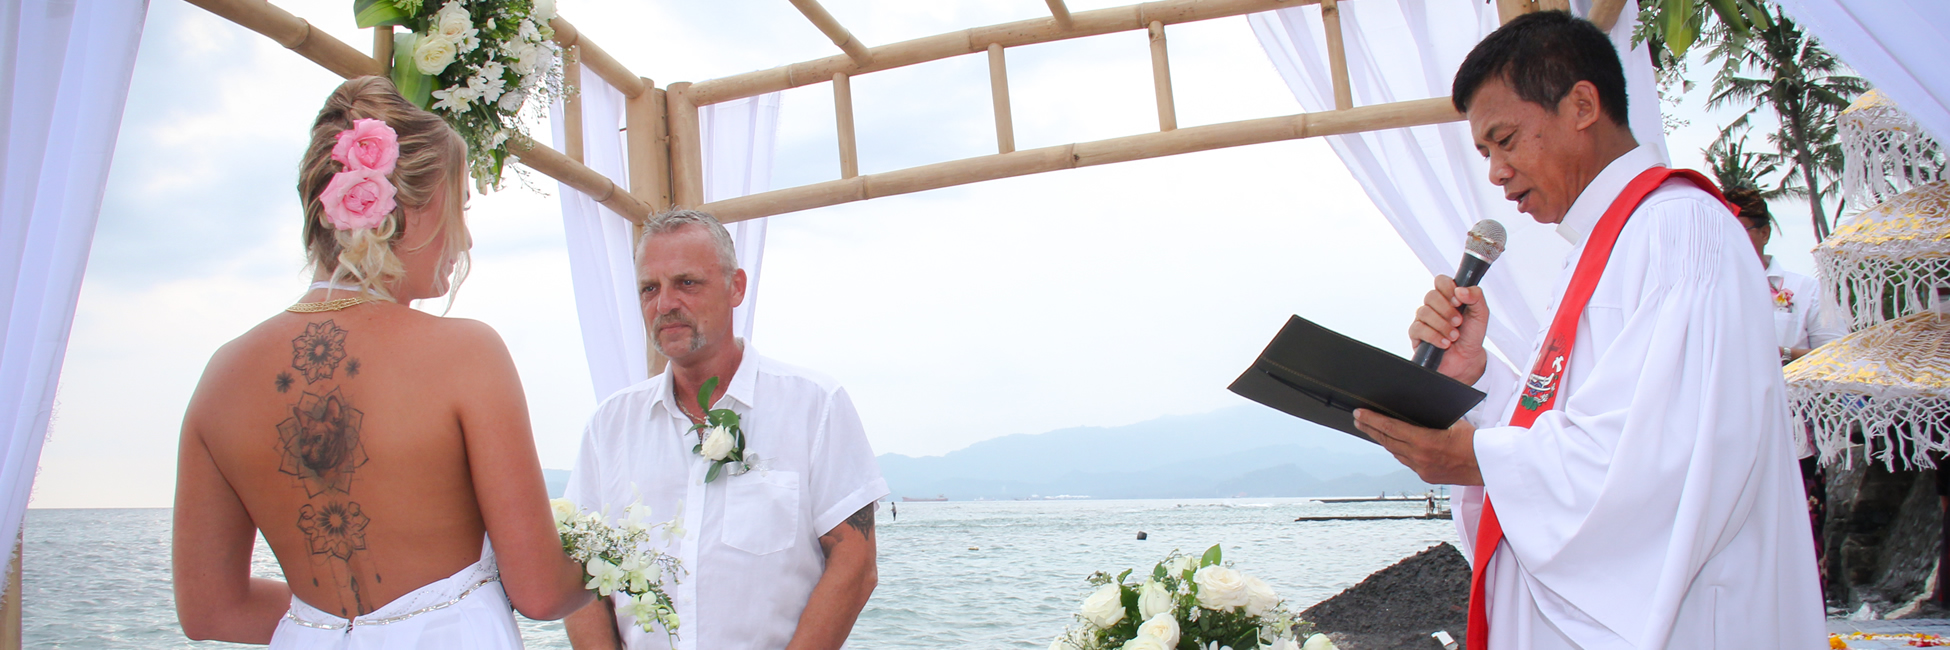 Wedding at Bali Seascape Beach Club or Bali Palms Resort